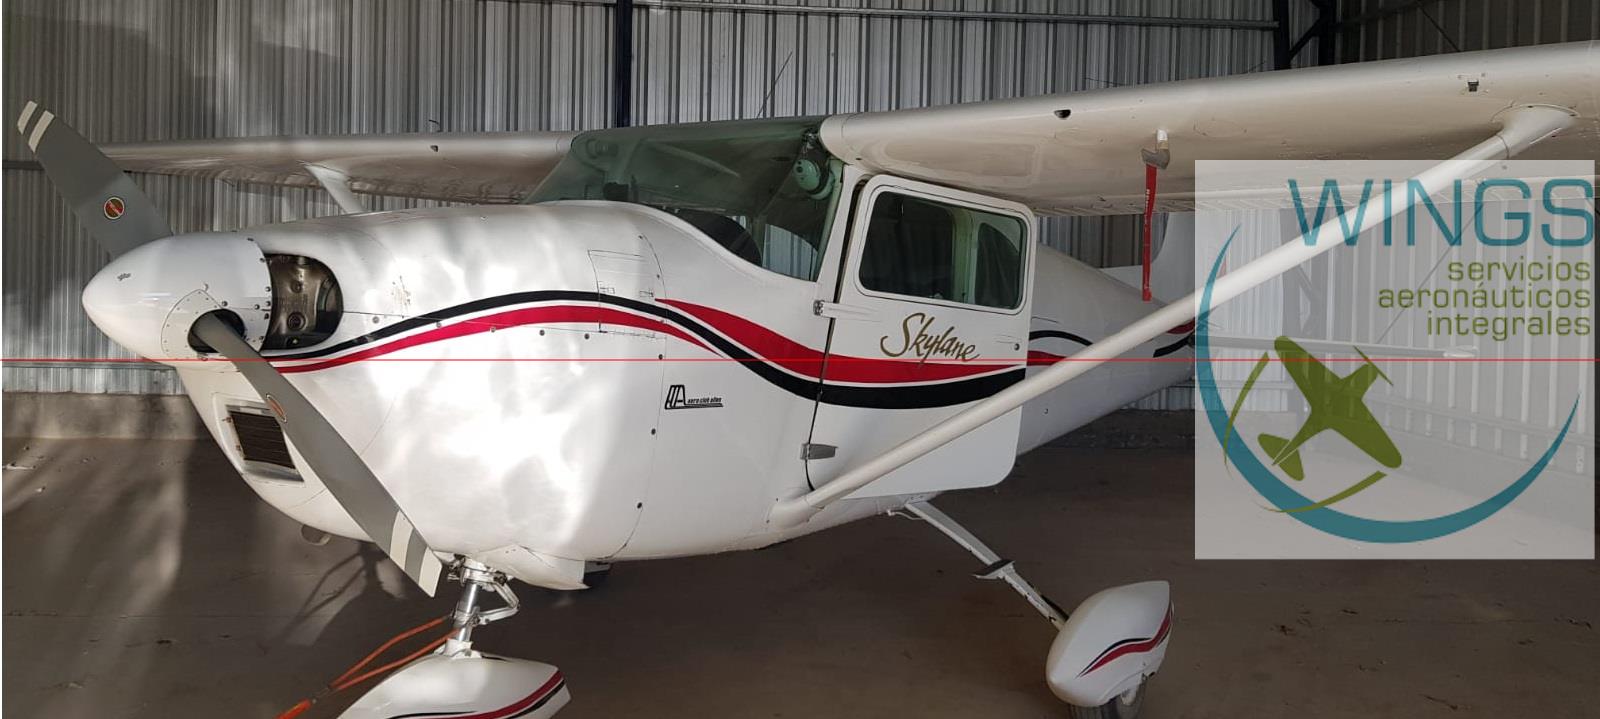 Cessna 182B Skyline – VENDIDO